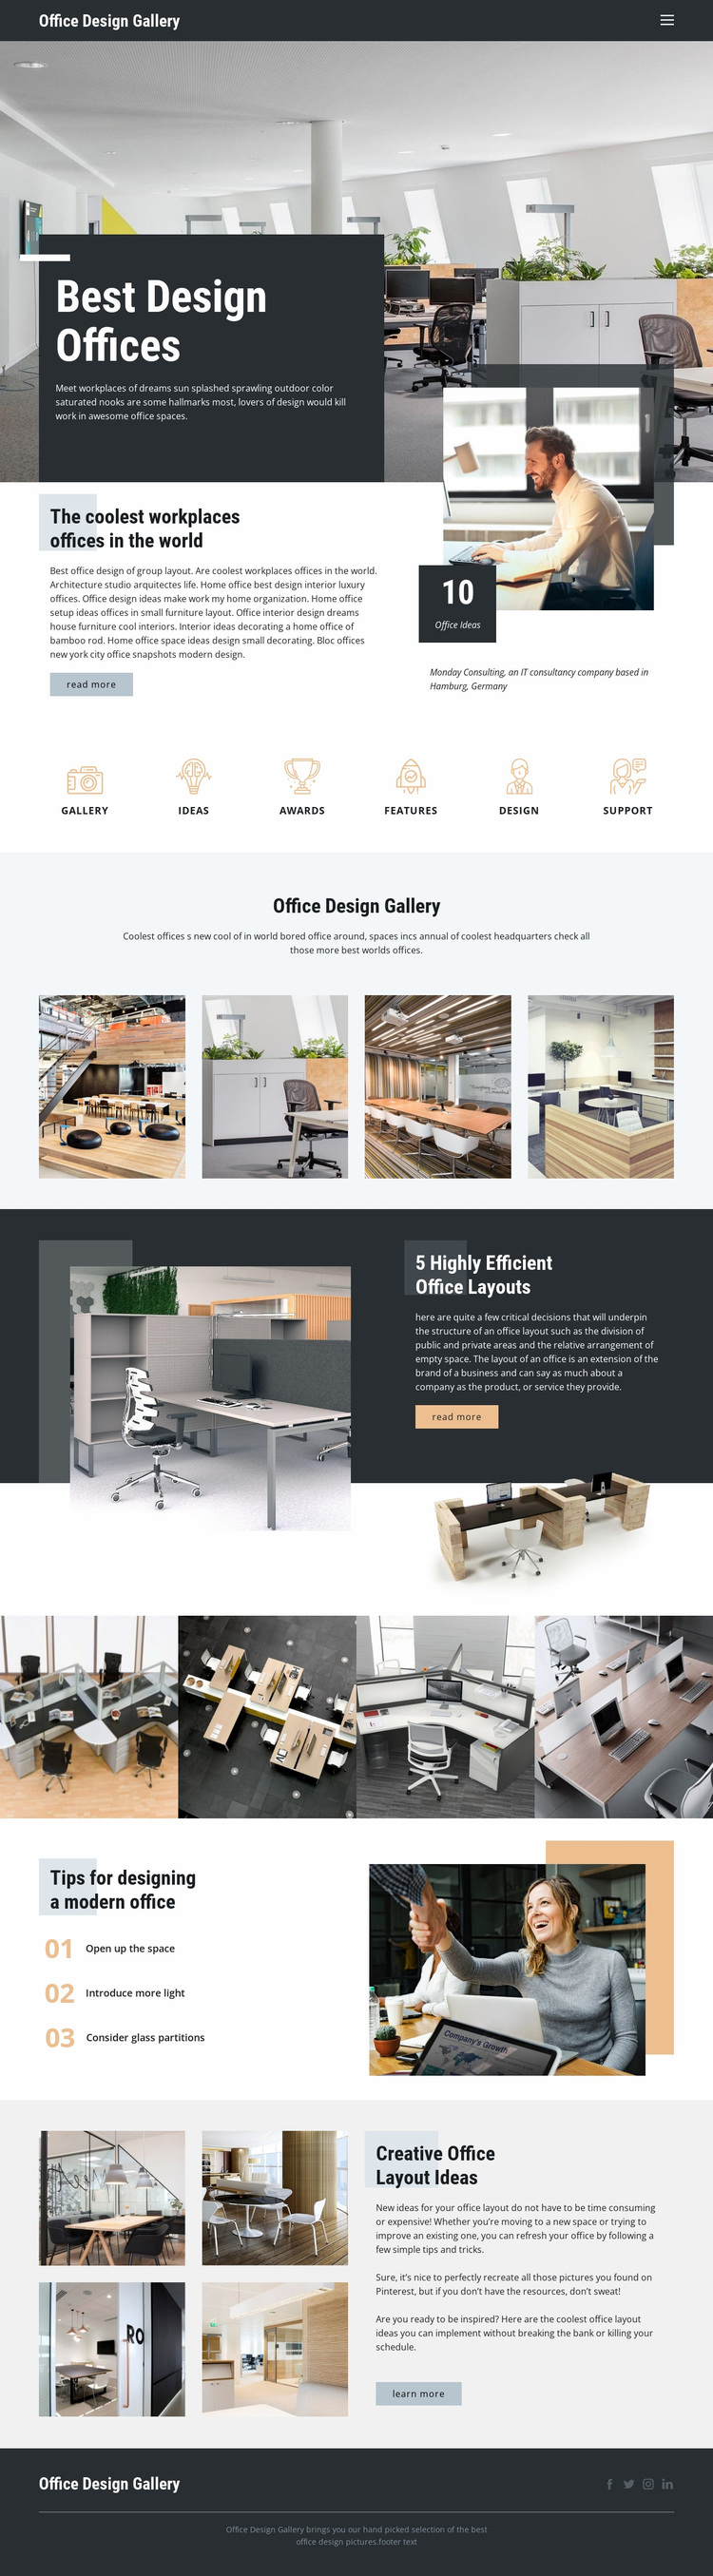 Best Design Offices Website Design